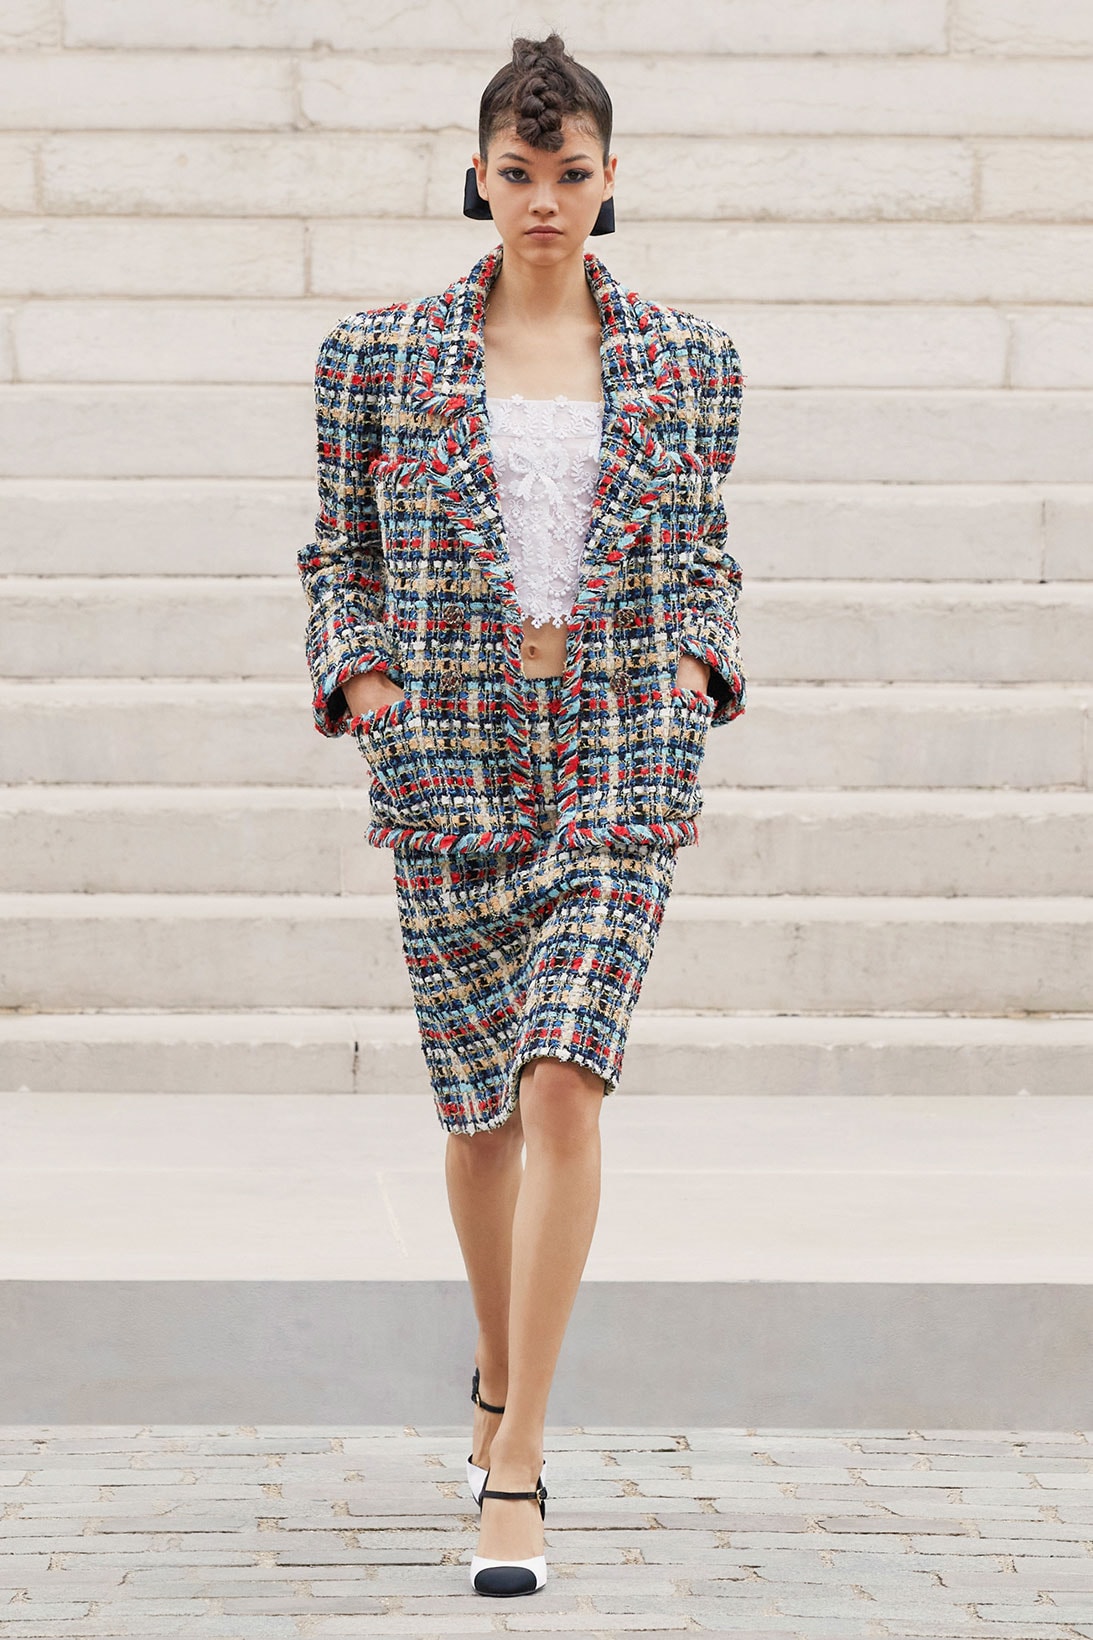 Chic Classics: Tweed Skirt Suit - Elle Blogs